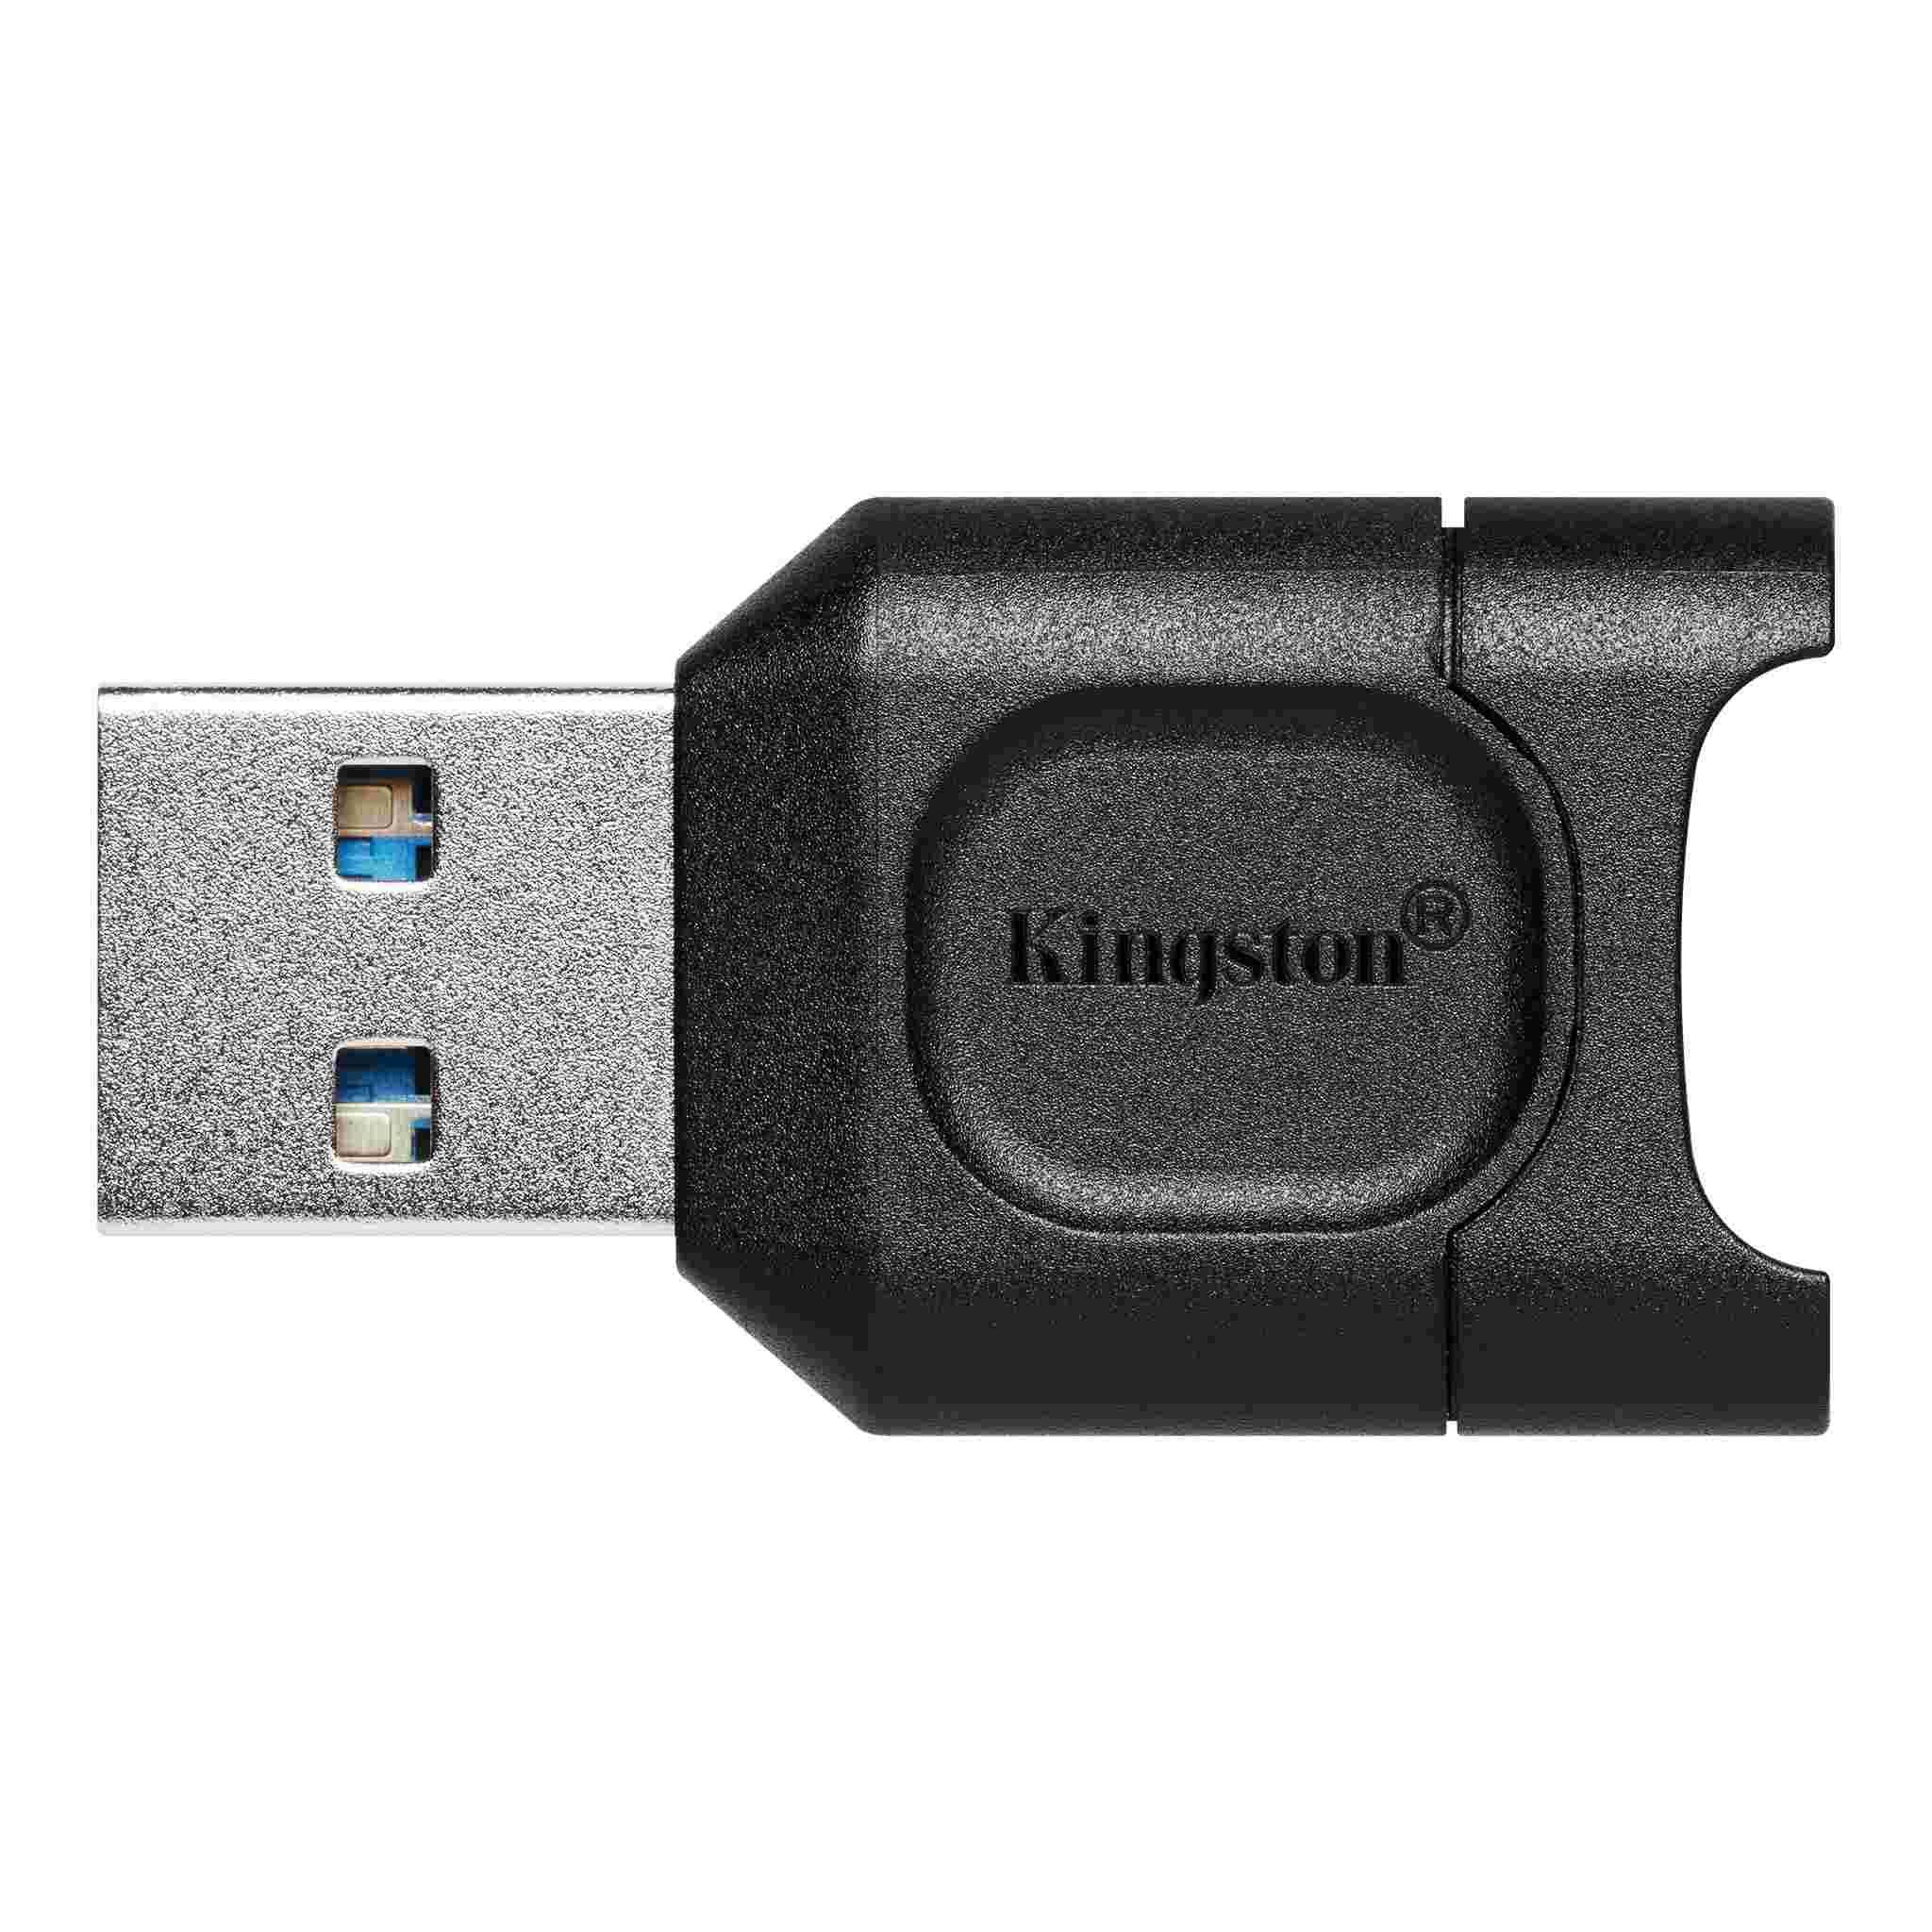 Kingston čítačka kariet MobileLite Plus USB 3.1 microSDHC/ SDXC UHS-II 